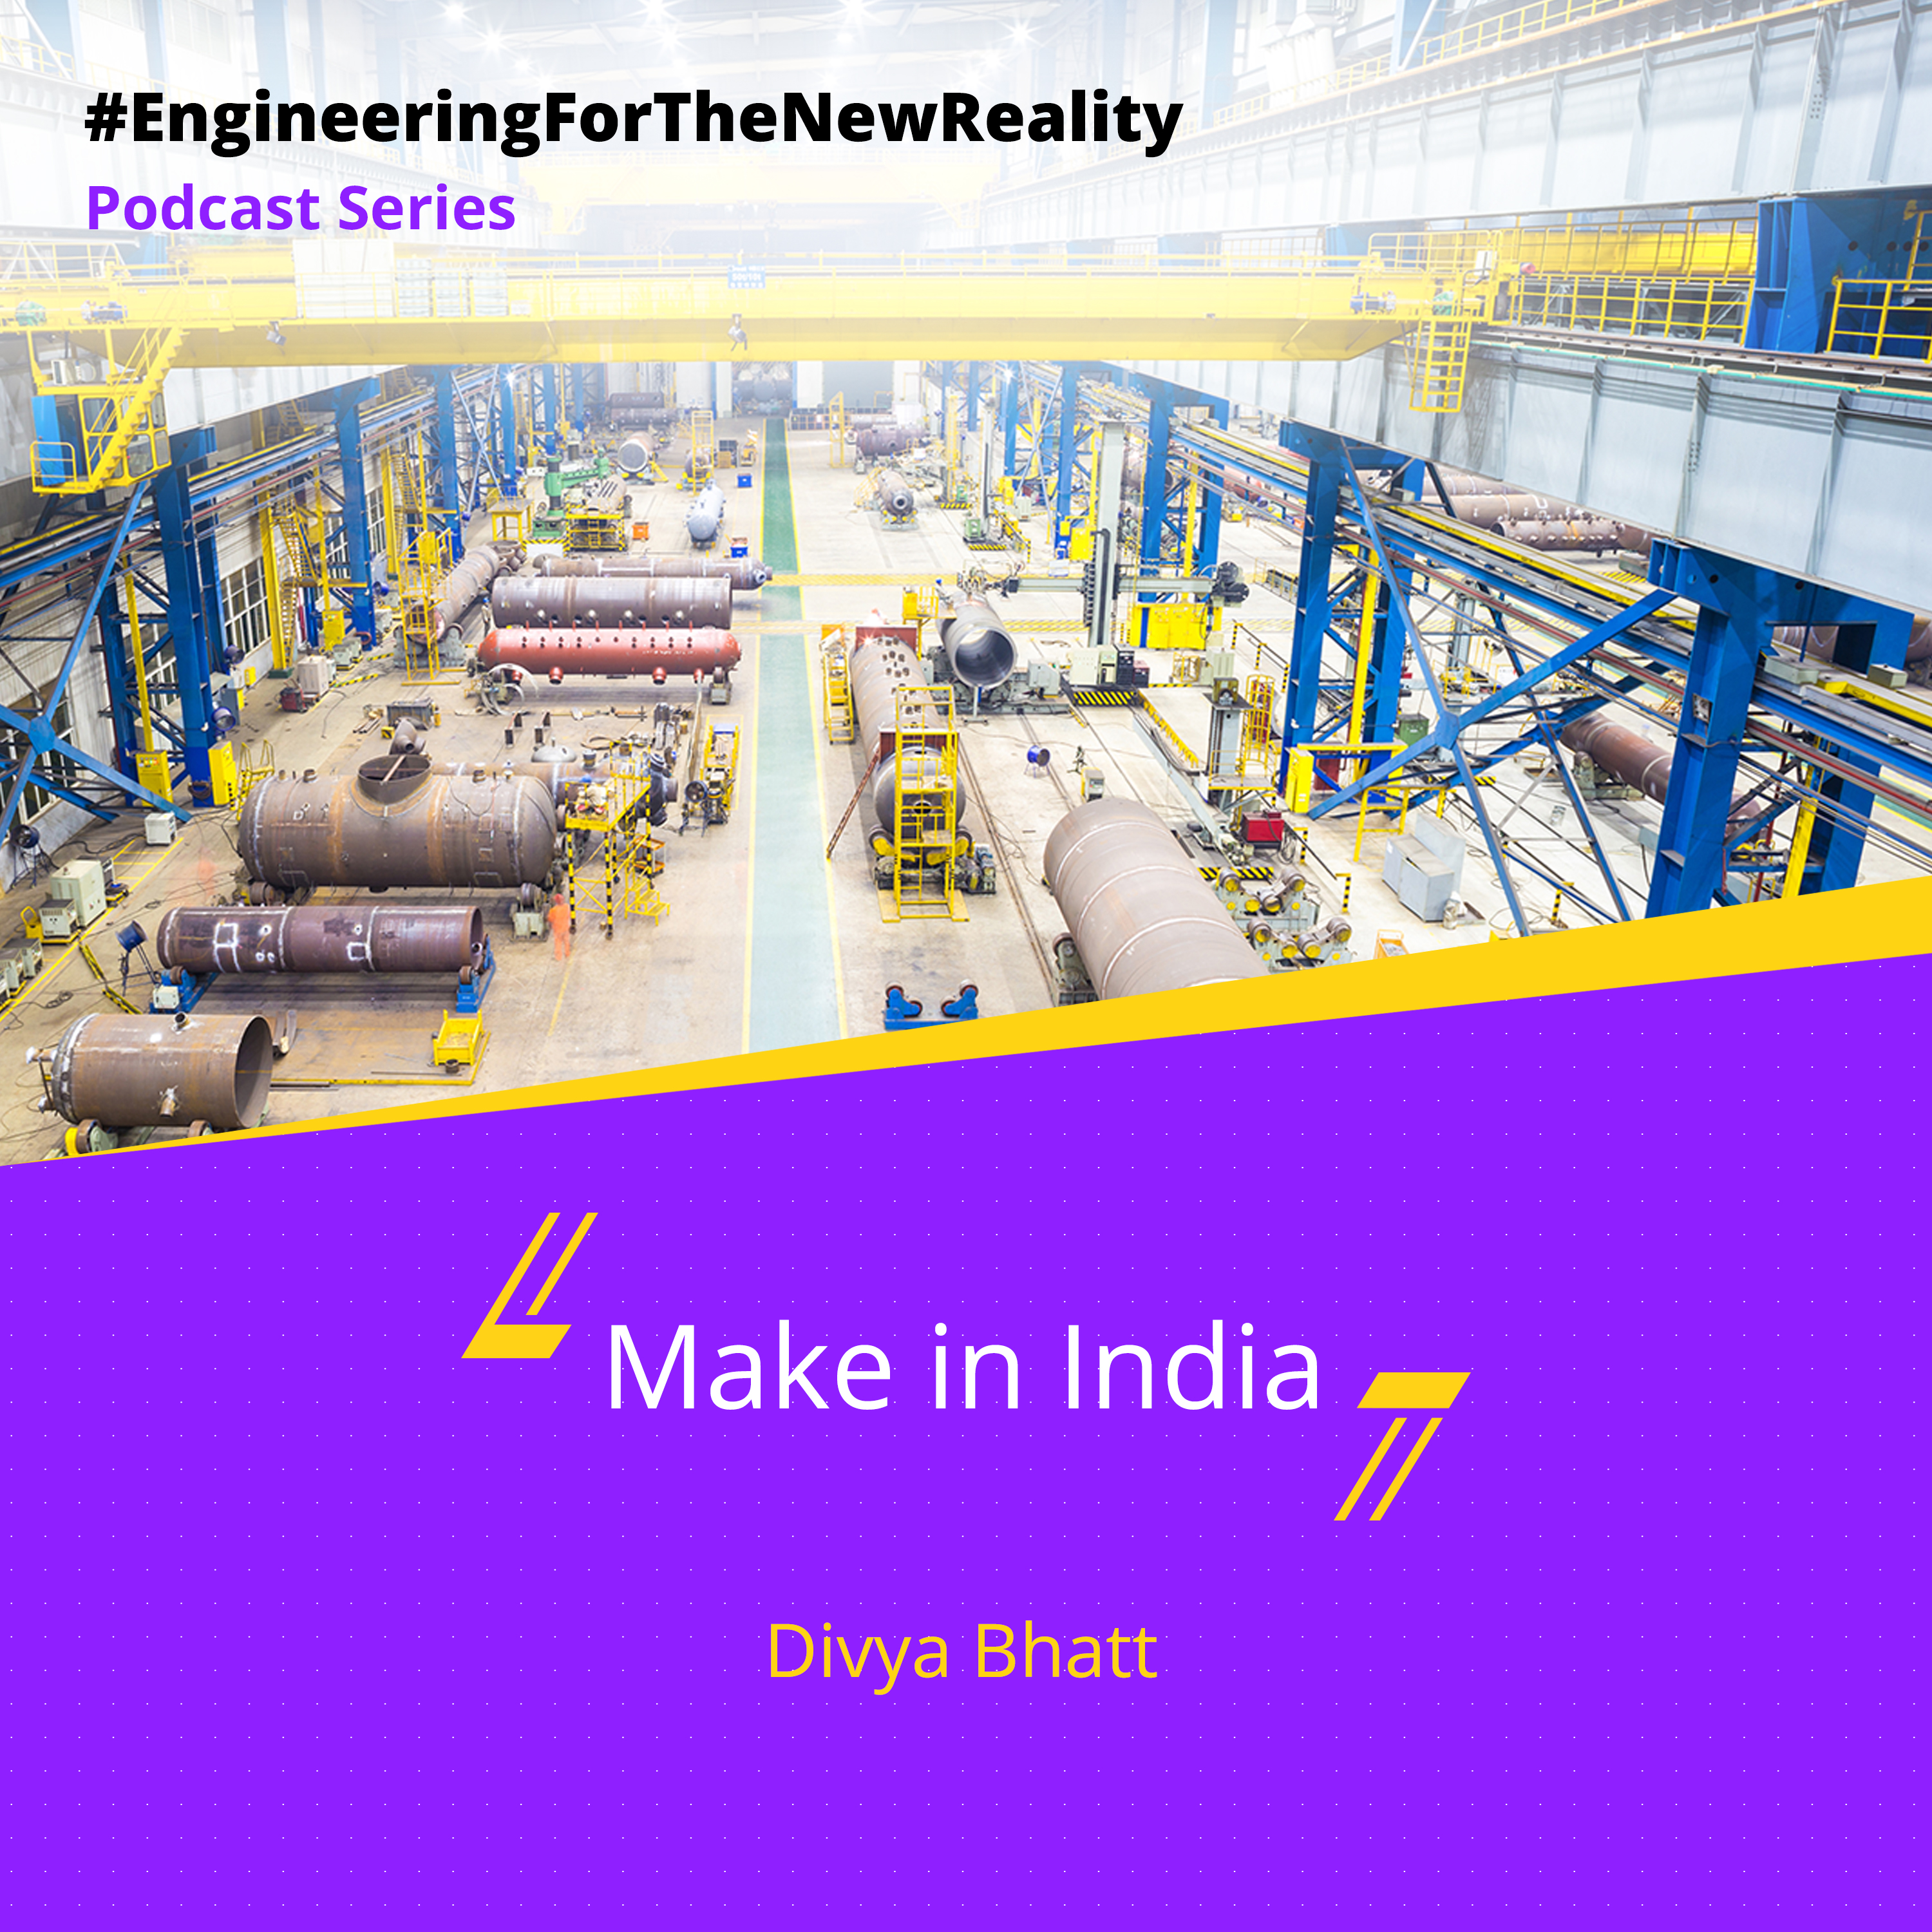 Make in India - An Alternative Manufacturing Hub